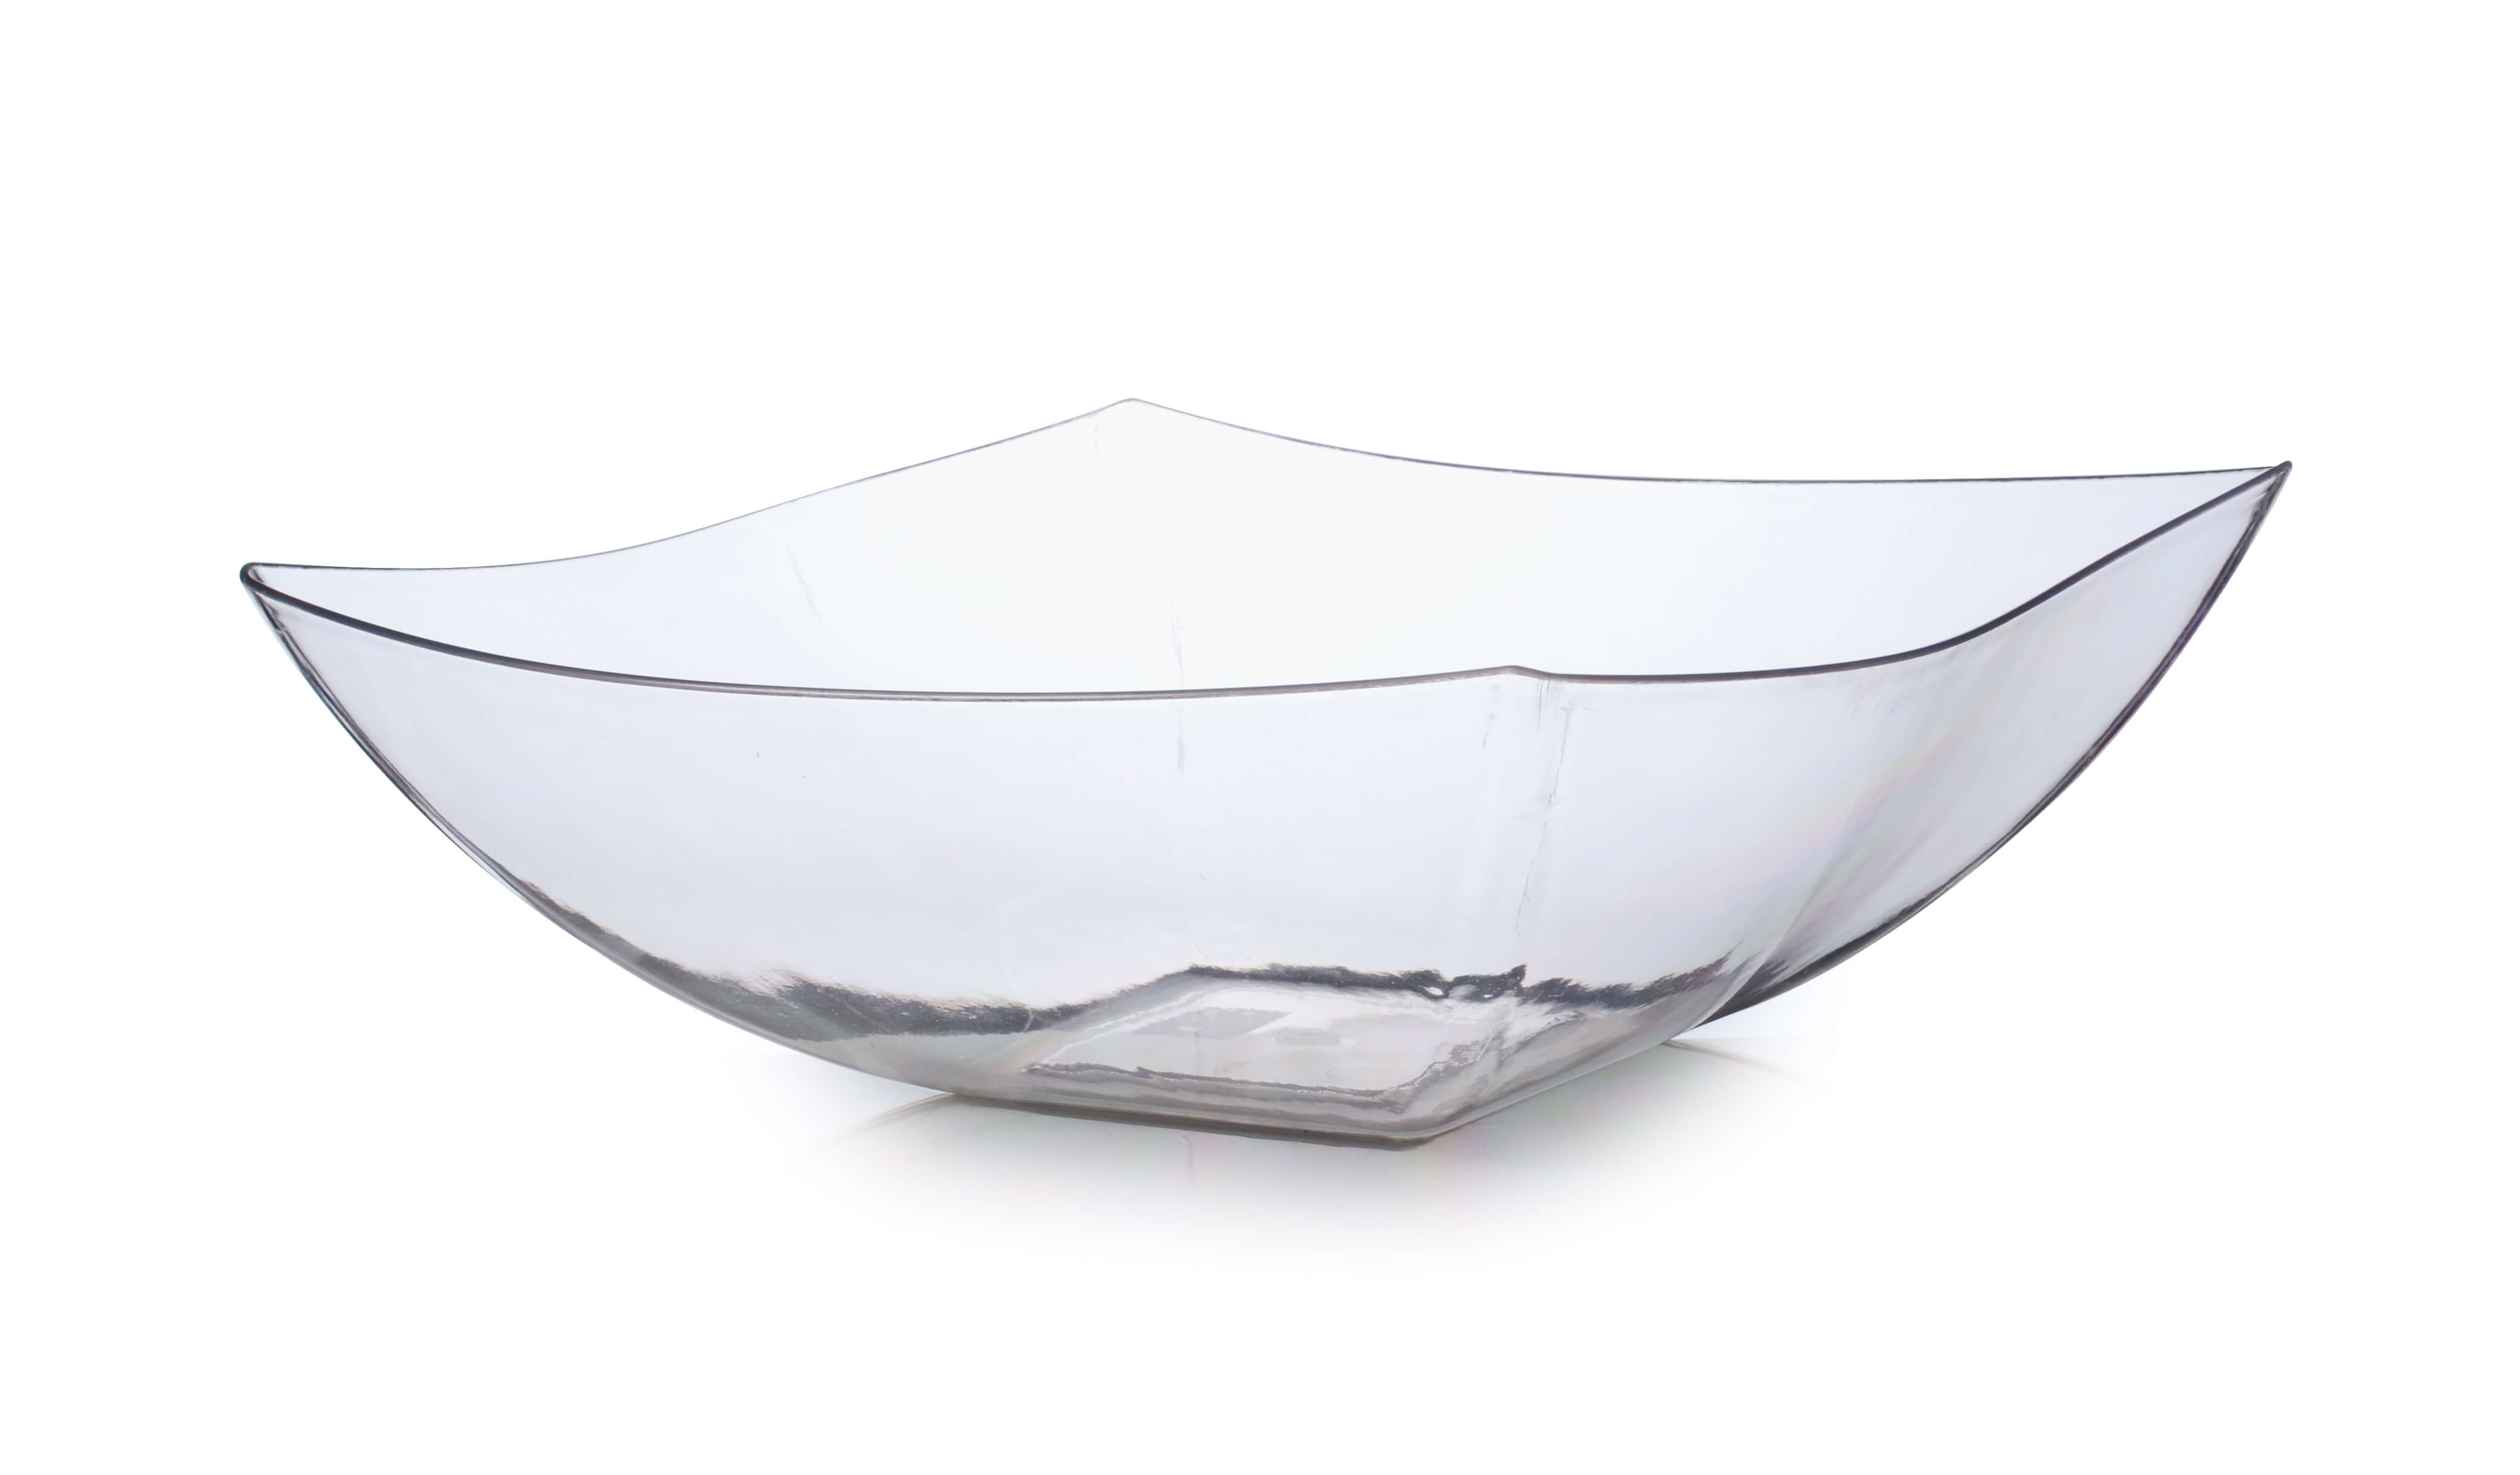 12 Clear Plastic Serving Bowls for Parties, 64 Oz.